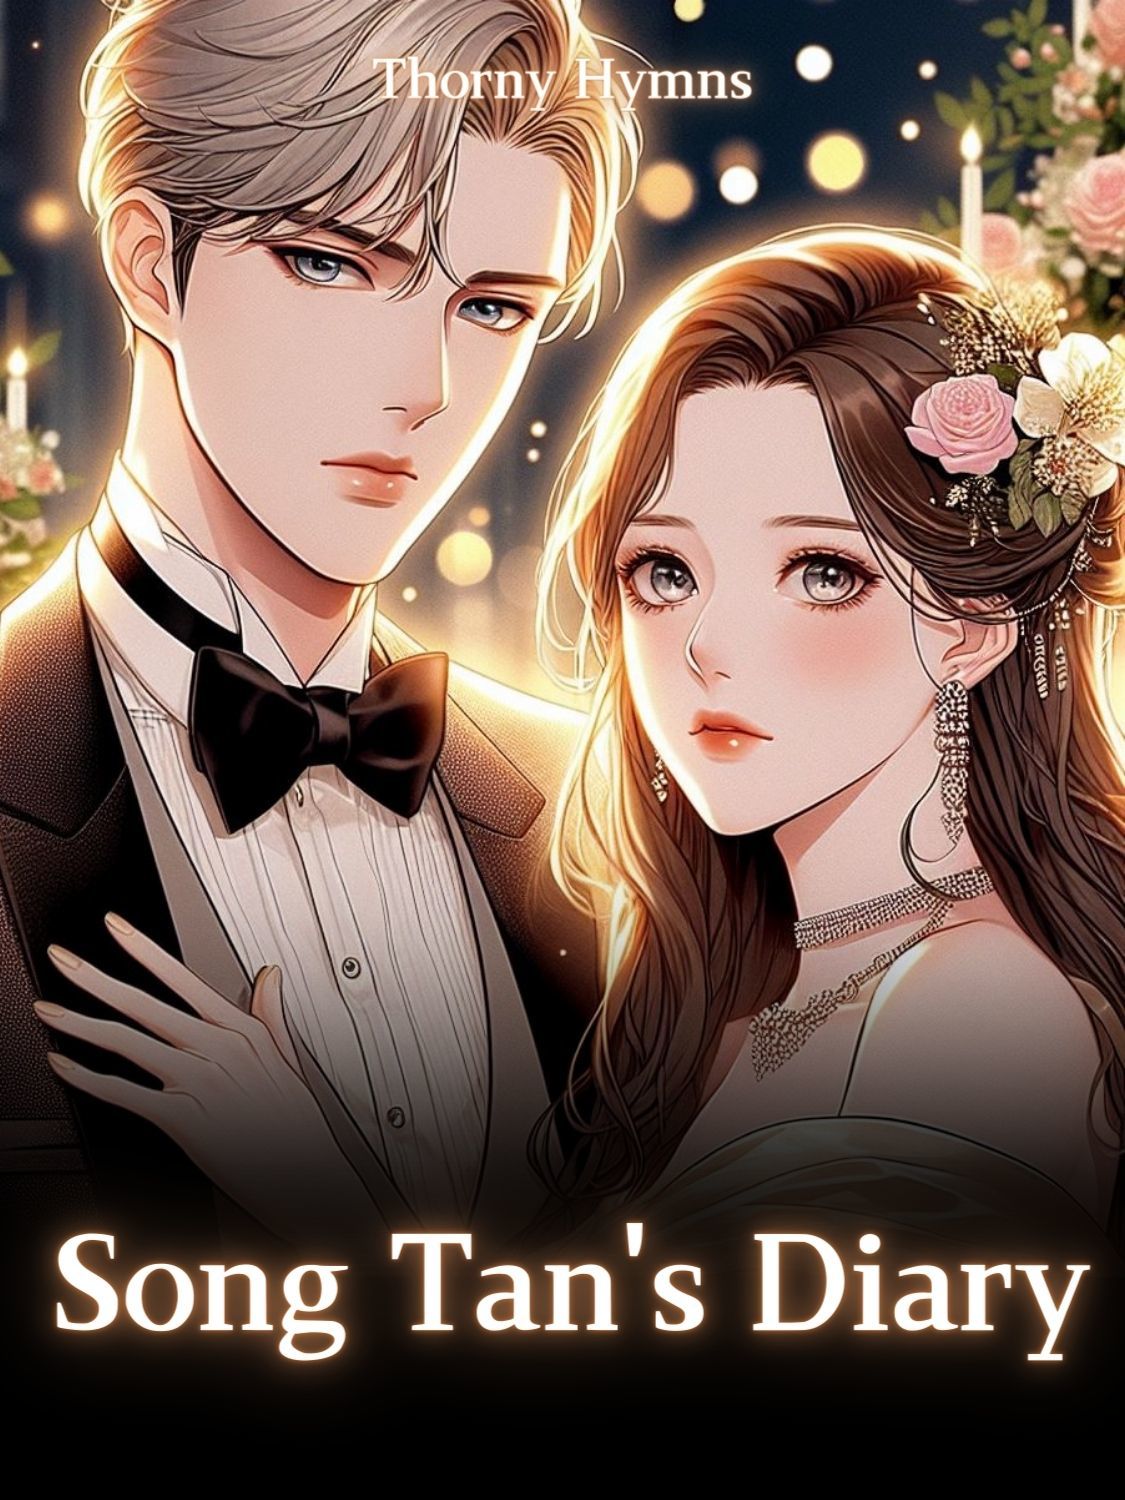 Song Tan's Diary